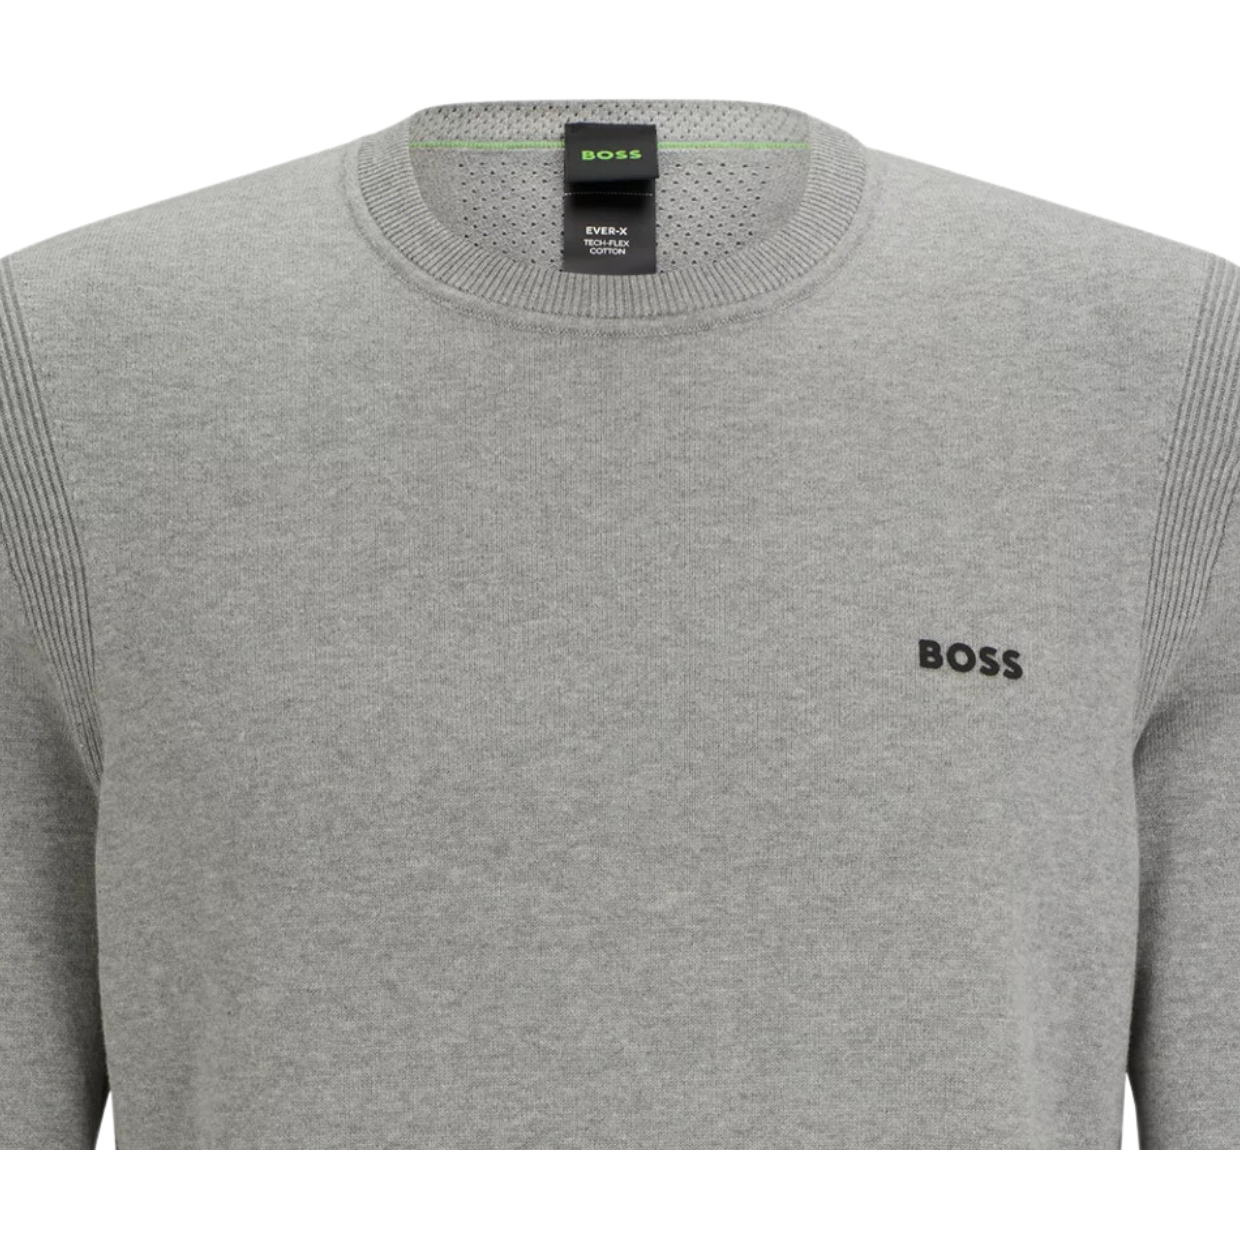 BOSS Grey Ever X Knit